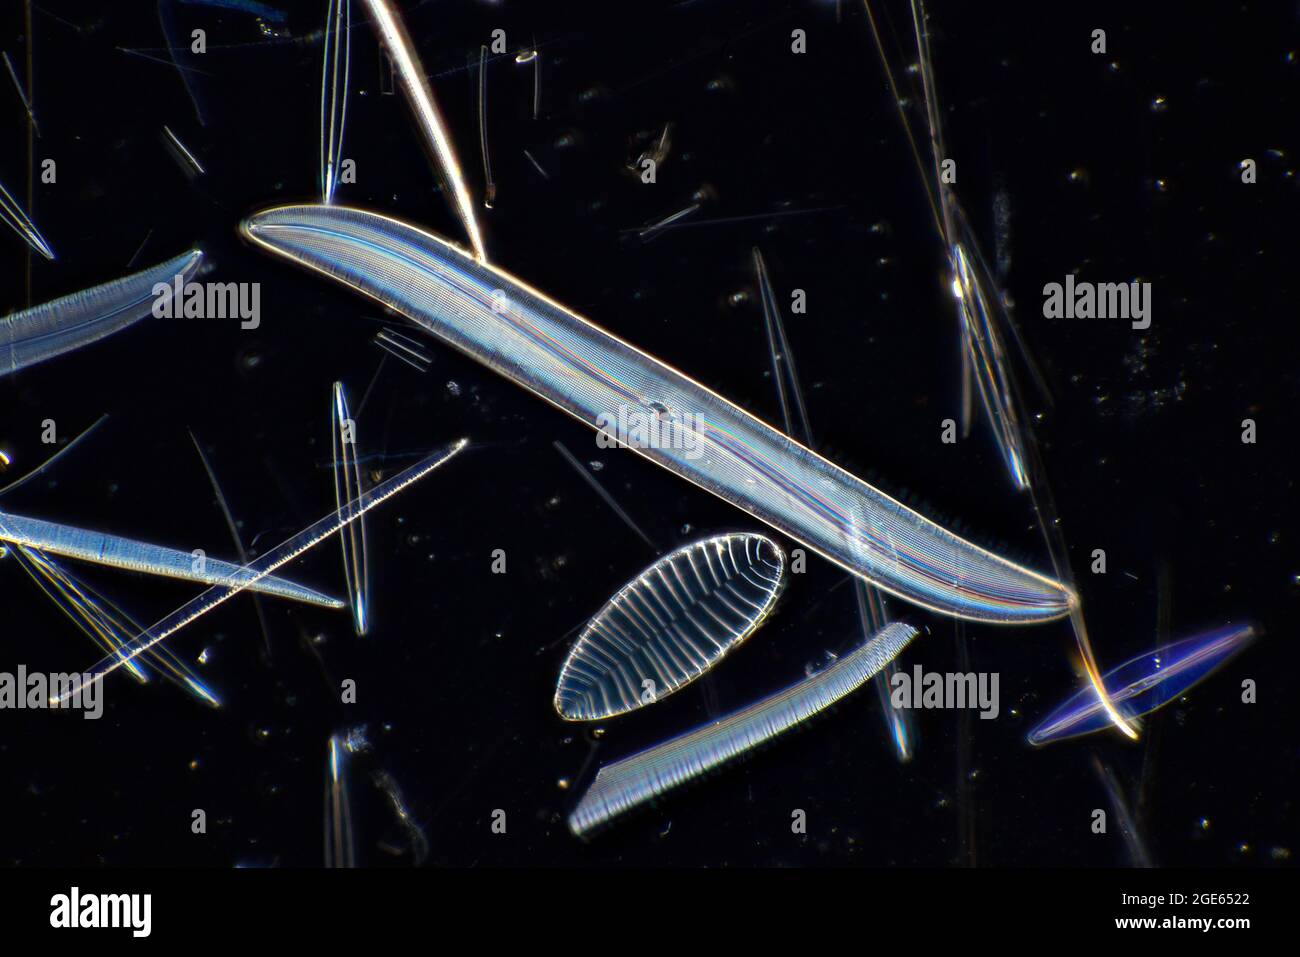 Pleurosigma balticum diatoms Stock Photo